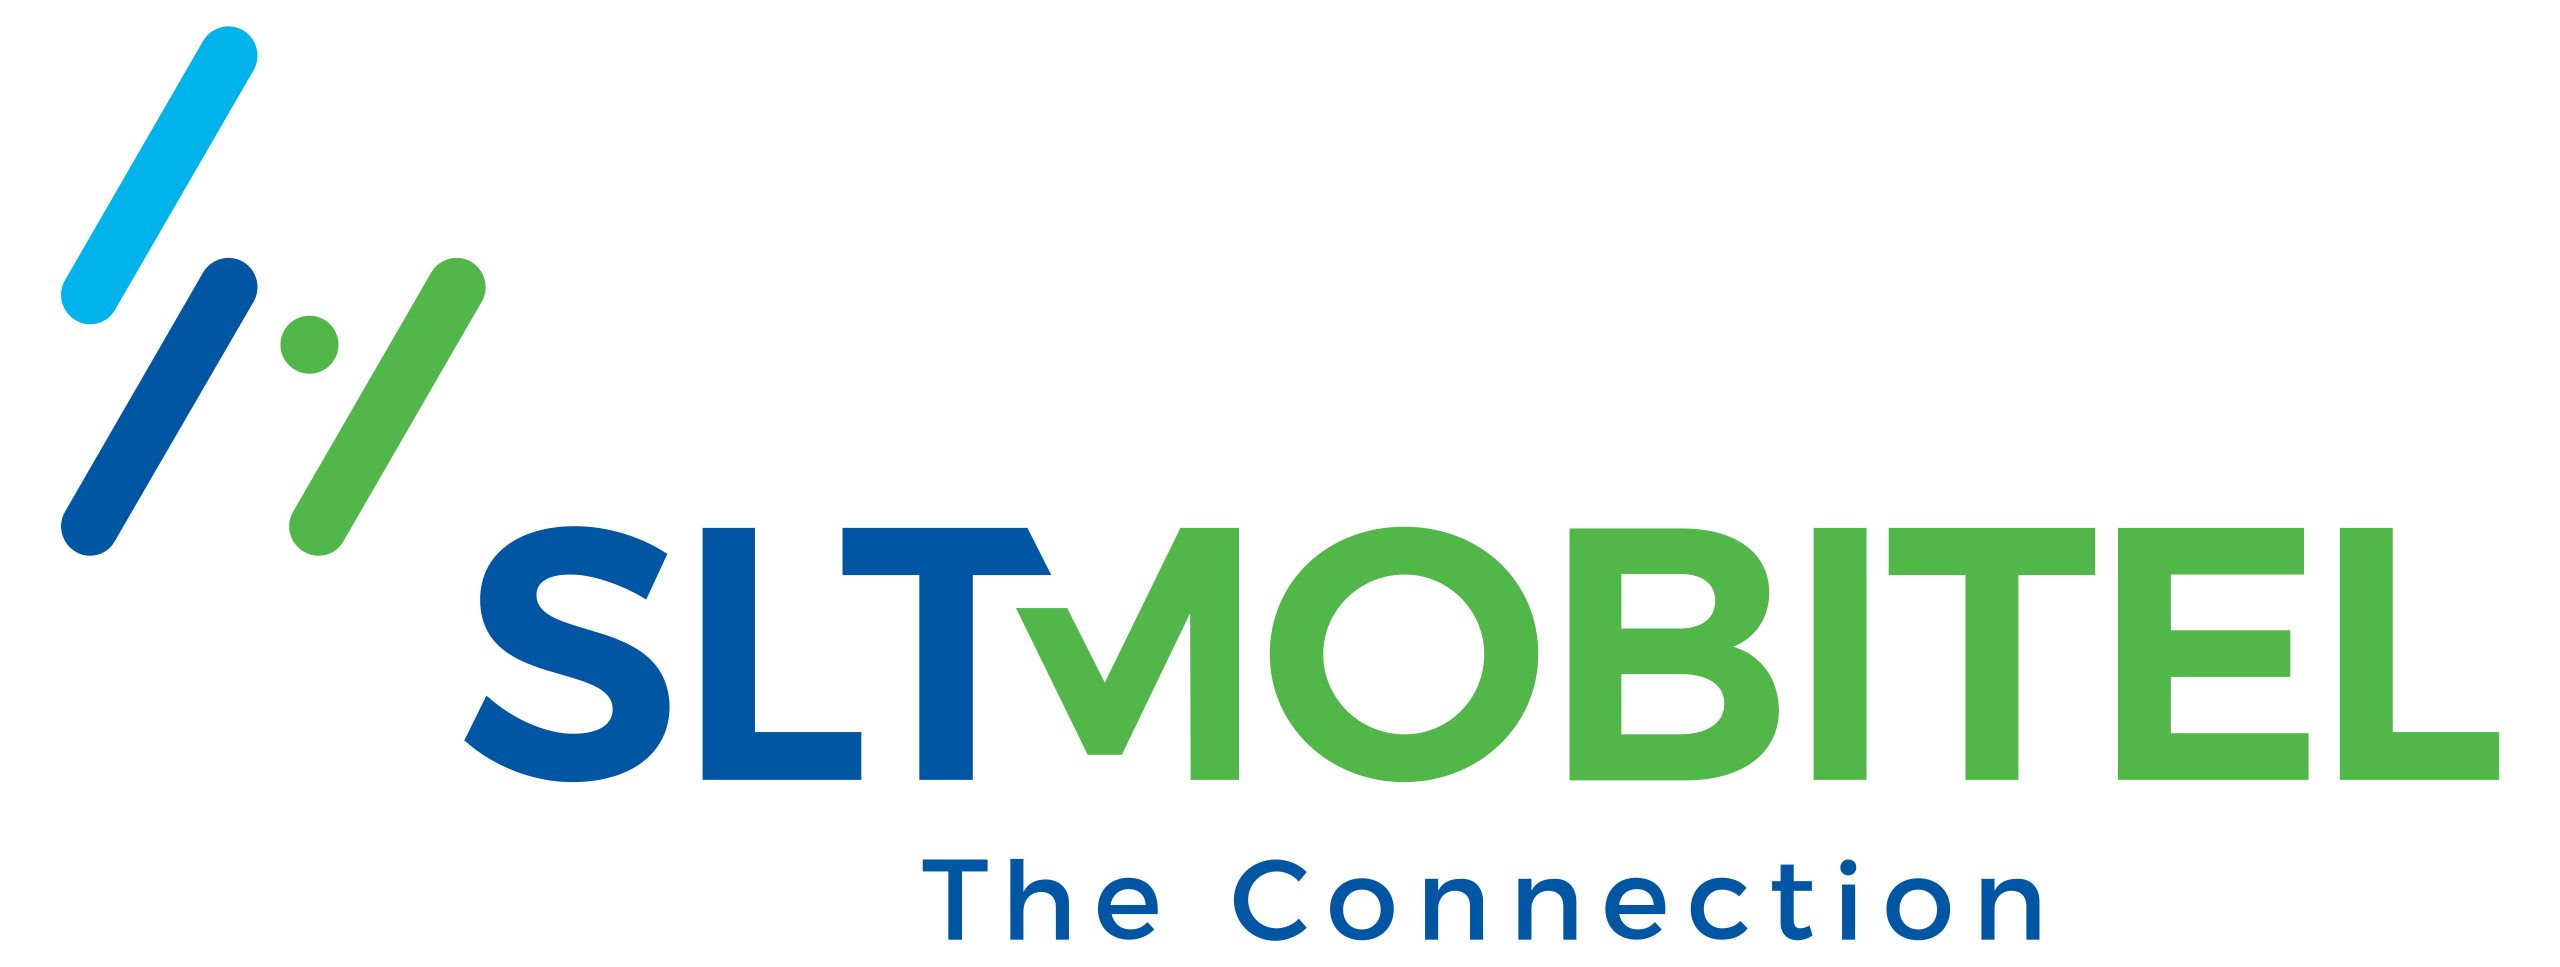 SLT-MOBITEL Extends Partnership with Netcracker for Converged Revenue Management